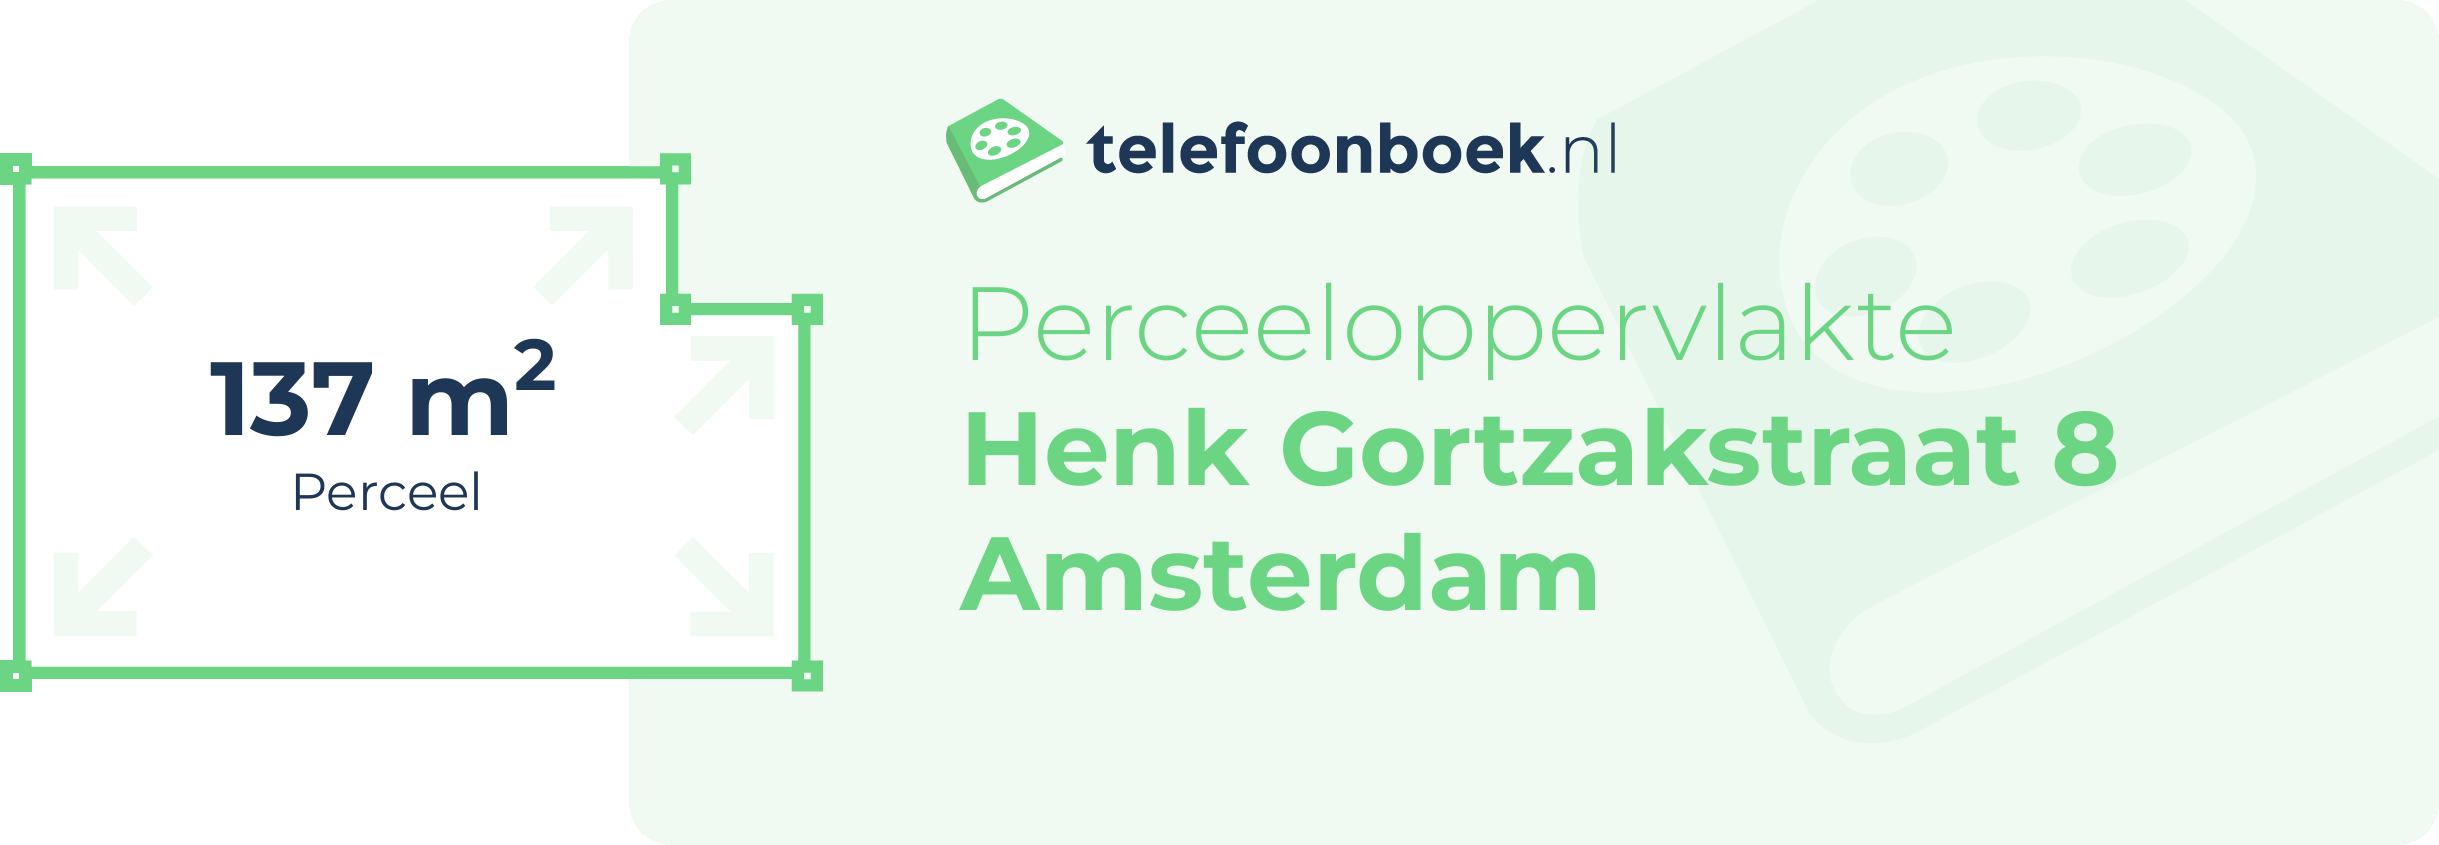 Perceeloppervlakte Henk Gortzakstraat 8 Amsterdam